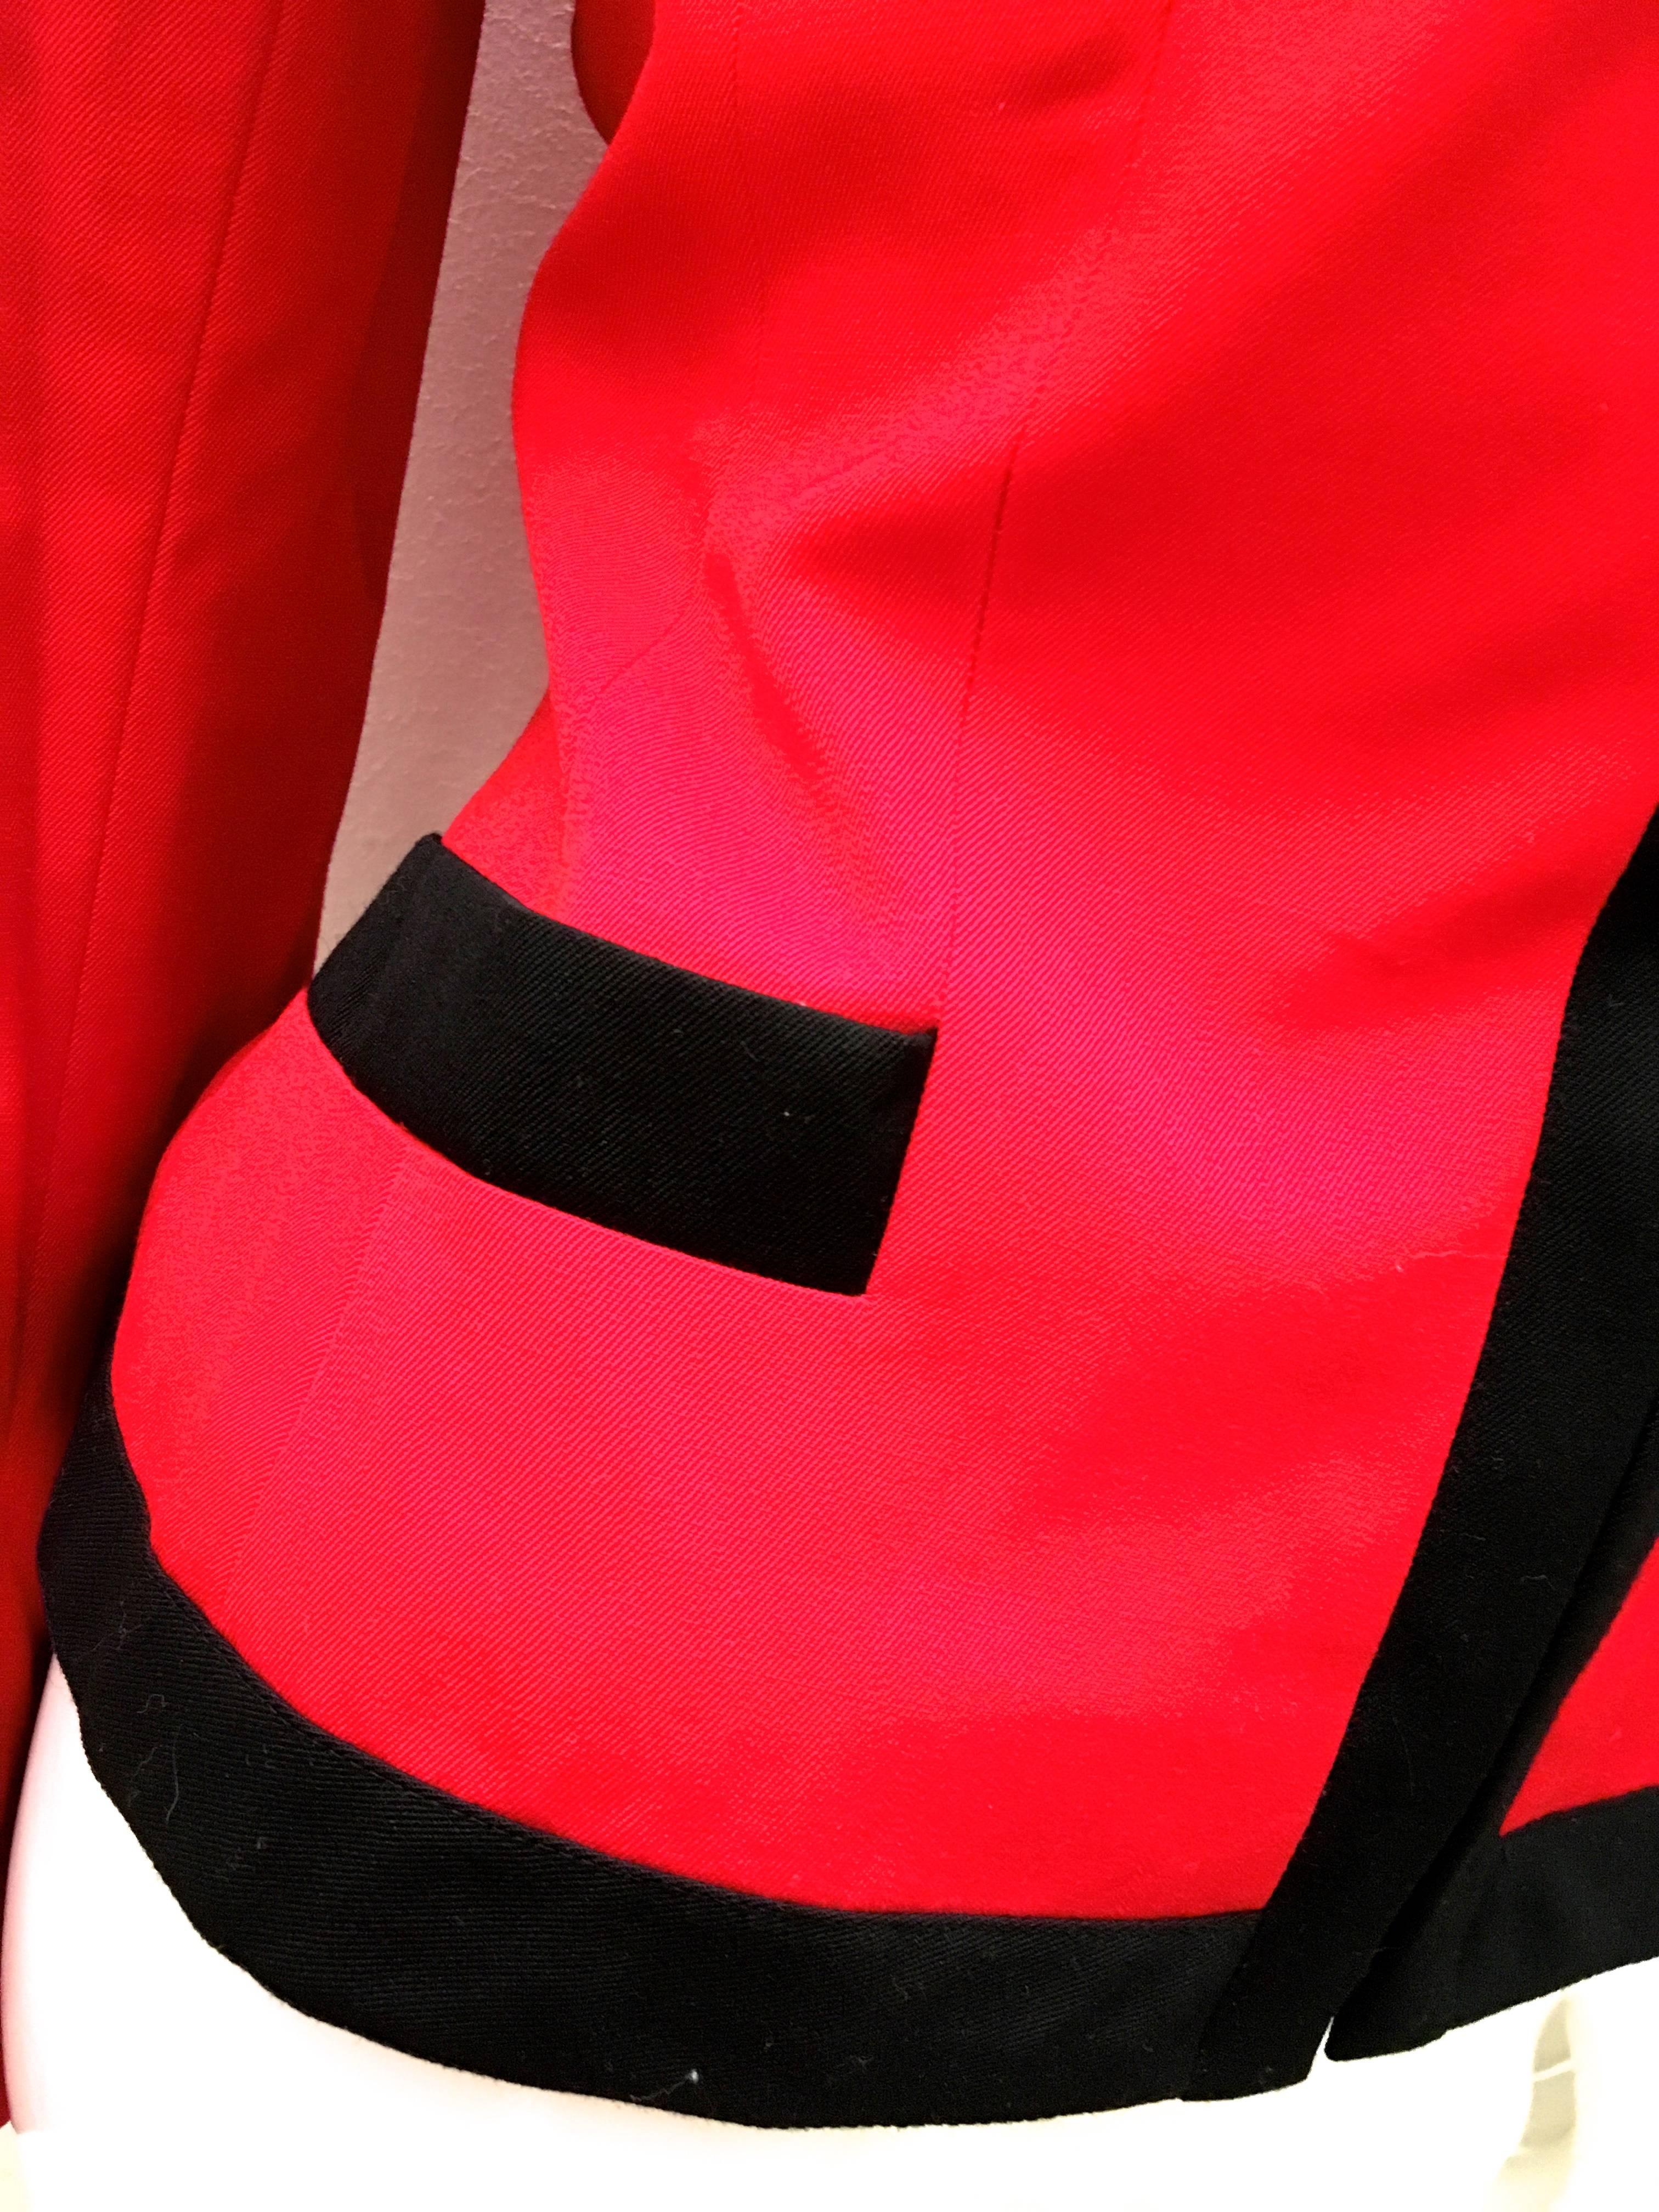 Lolita Lempicka Red Zip-Up Jacket with Black Trim For Sale 2